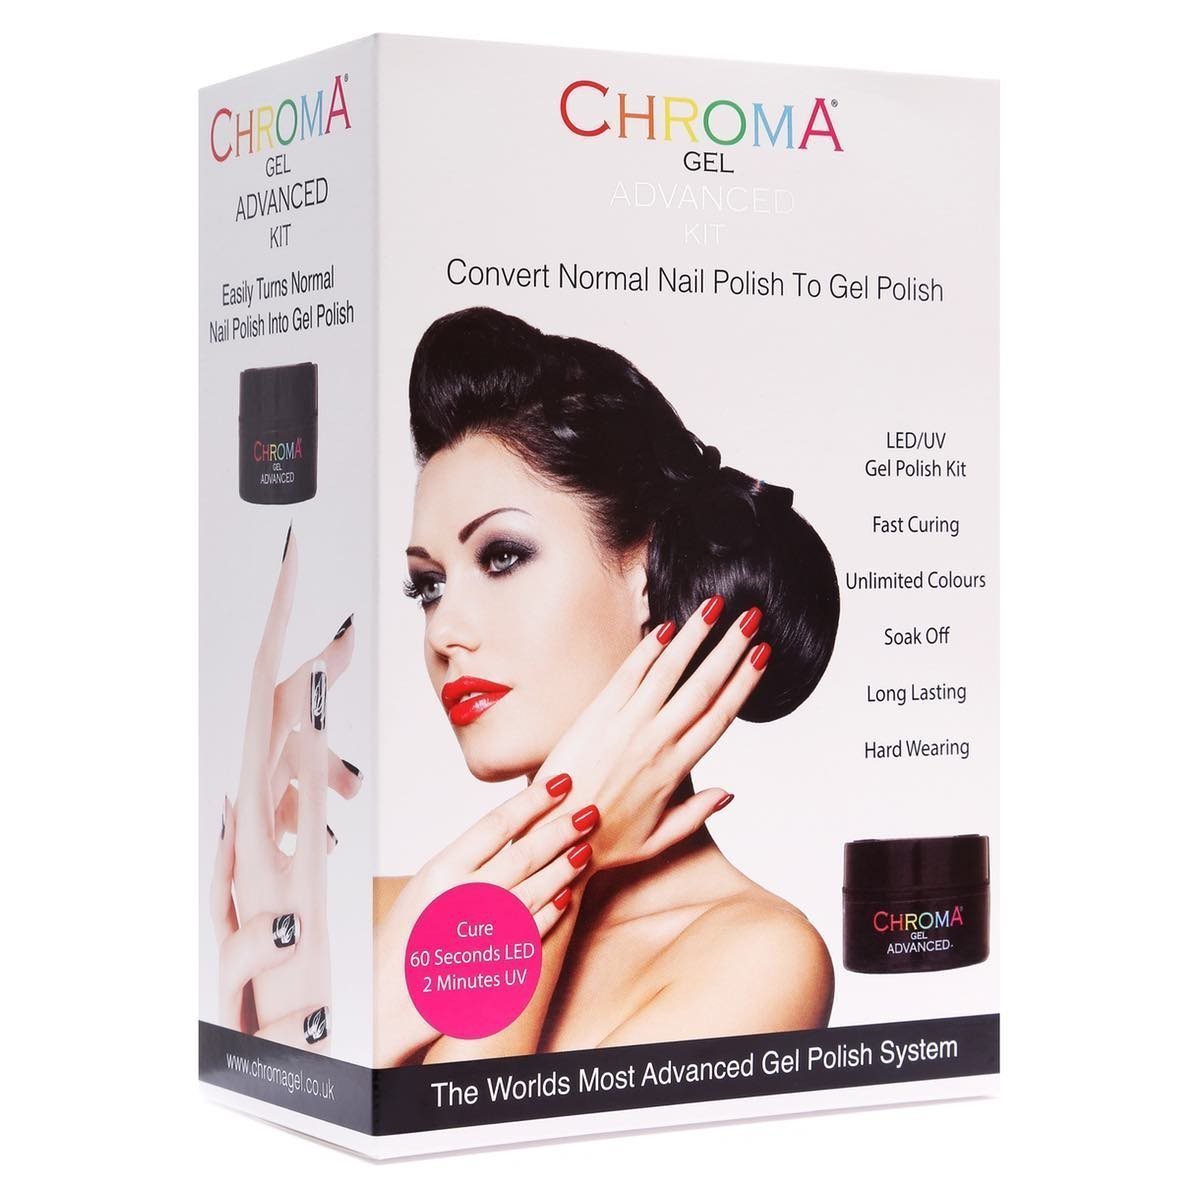 Chroma Gel Advanced Kit - Convert Normal Nail Polish into Long-Lasting Gel - Includes 14ml Gel, 10ml Finishing Touch, LED-Curable & 30 Applications - beautyhair.co.ukChroma Gel